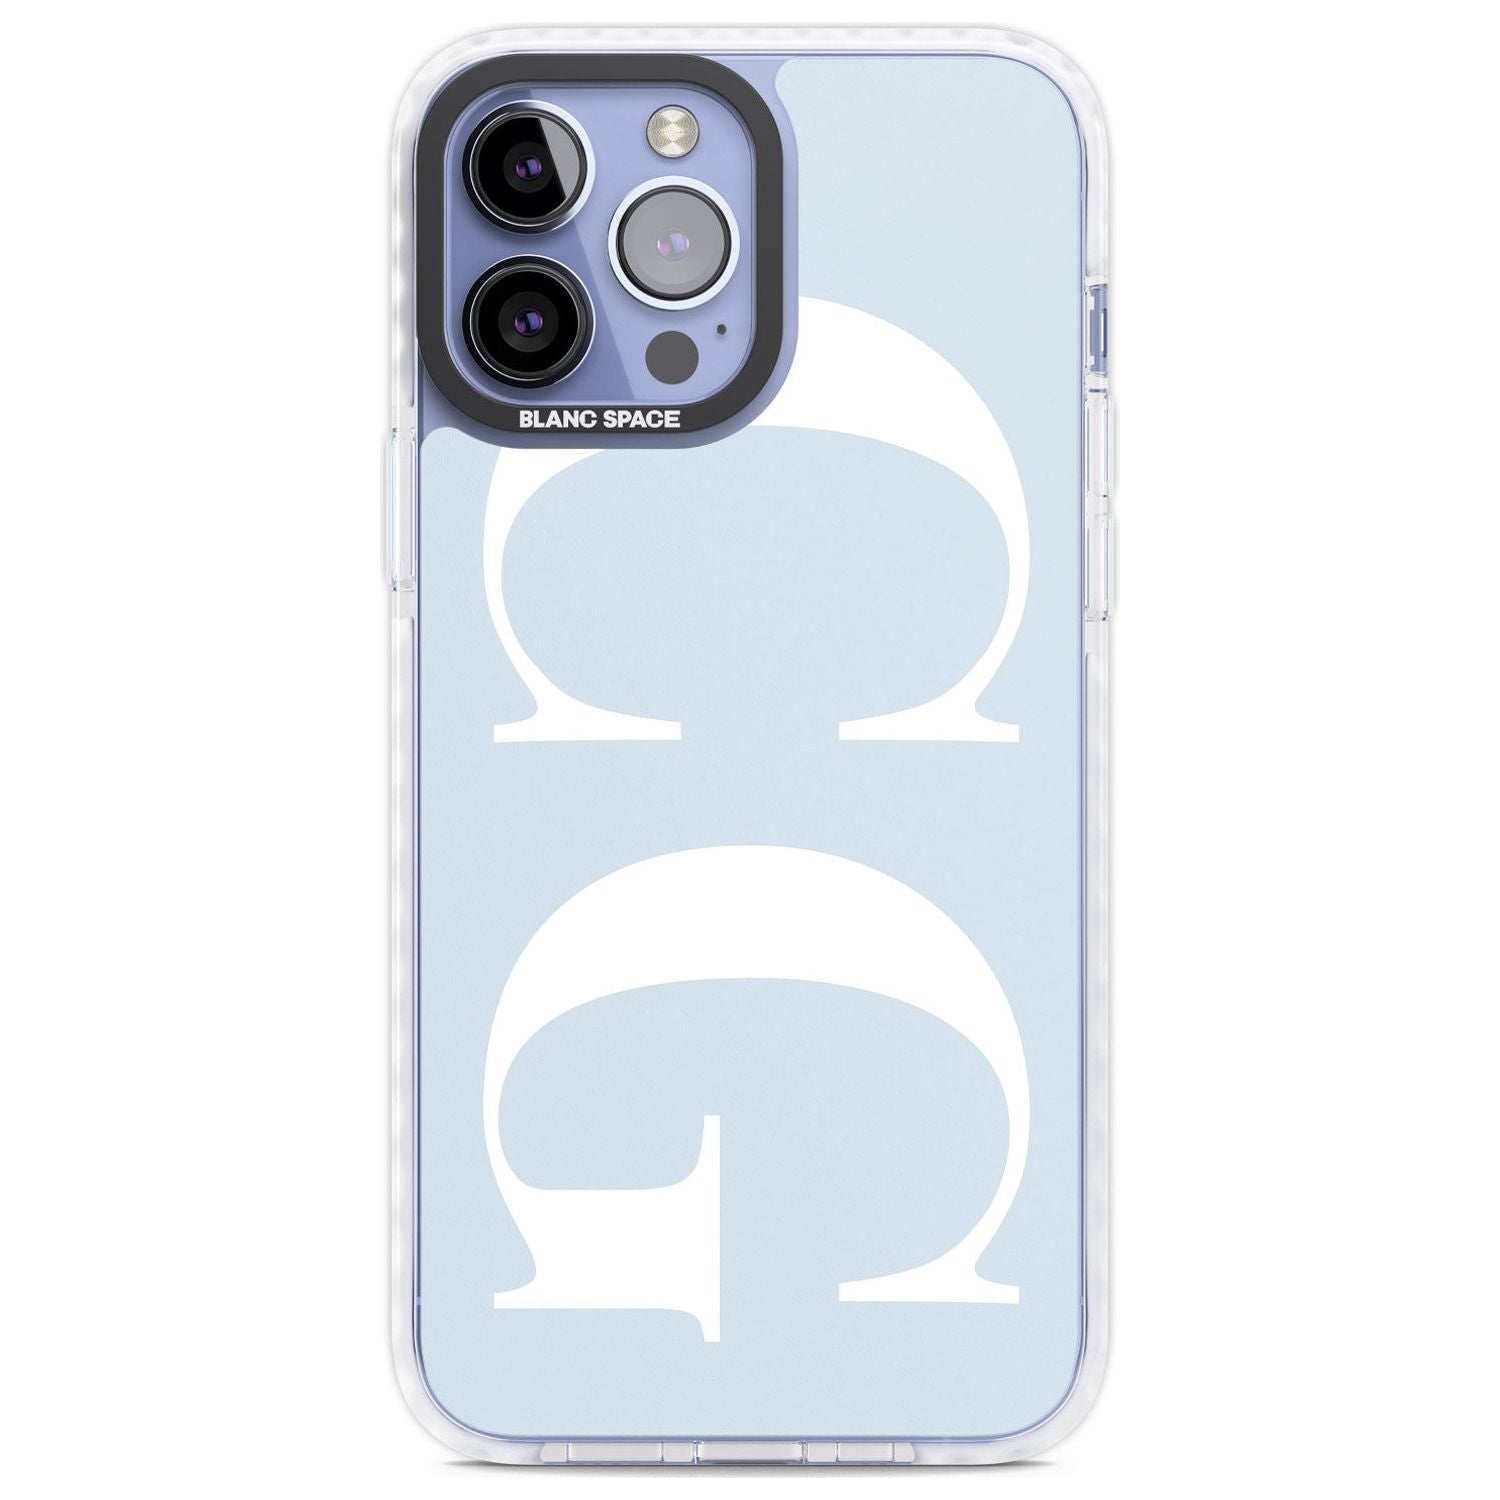 Almond Latte - Cute iPhone 11 Pro Max Case